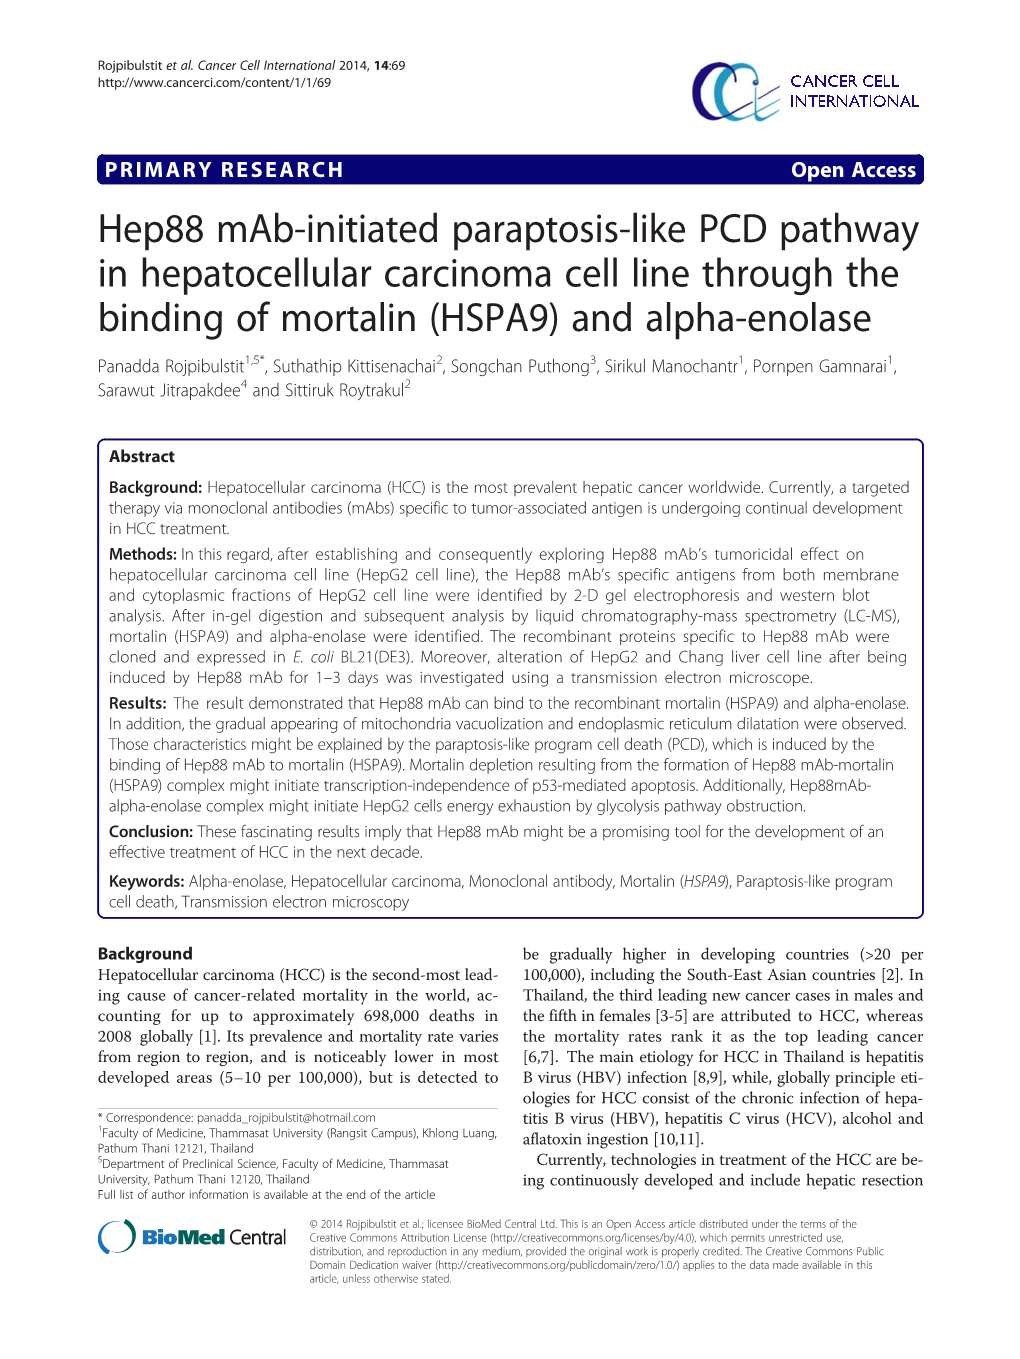 Hep88 Mab-Initiated Paraptosis-Like PCD Pathway in Hepatocellular